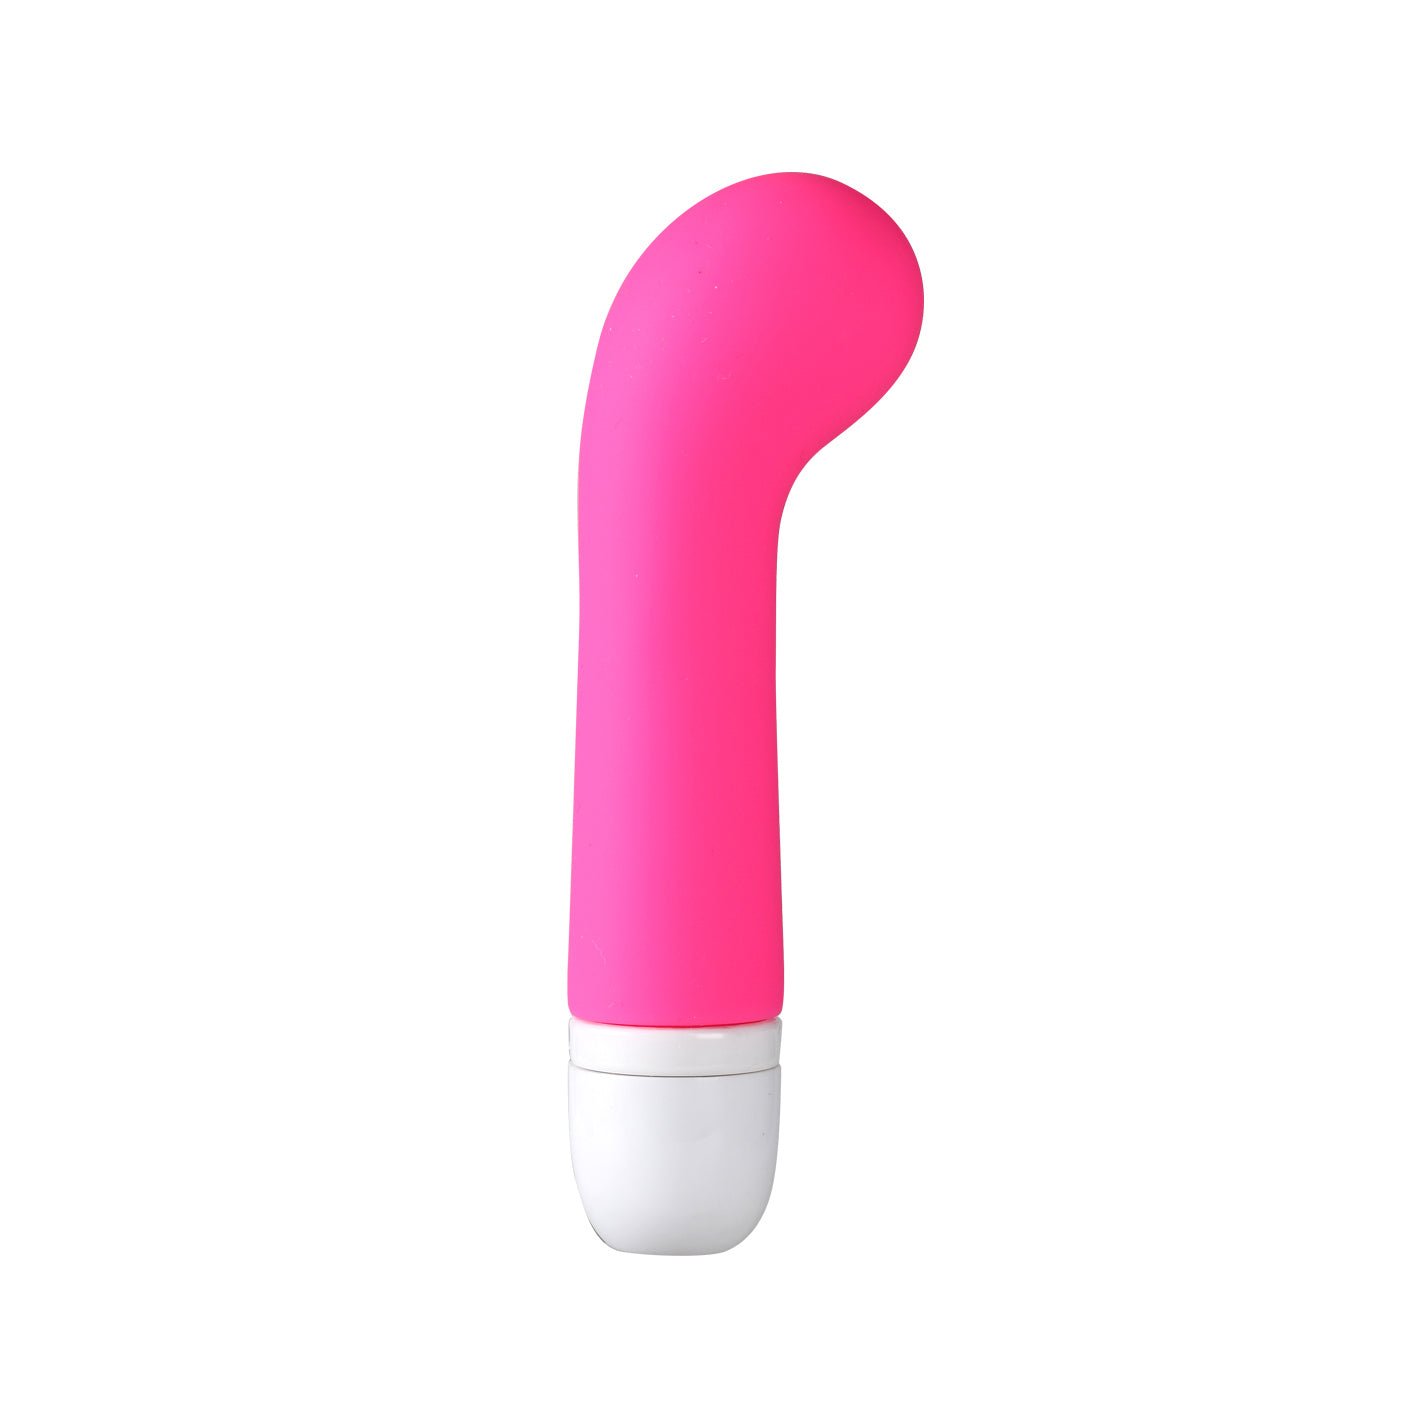 Ava Silicone Mini G-Spot Vibrator - Pink (Maia Toys)